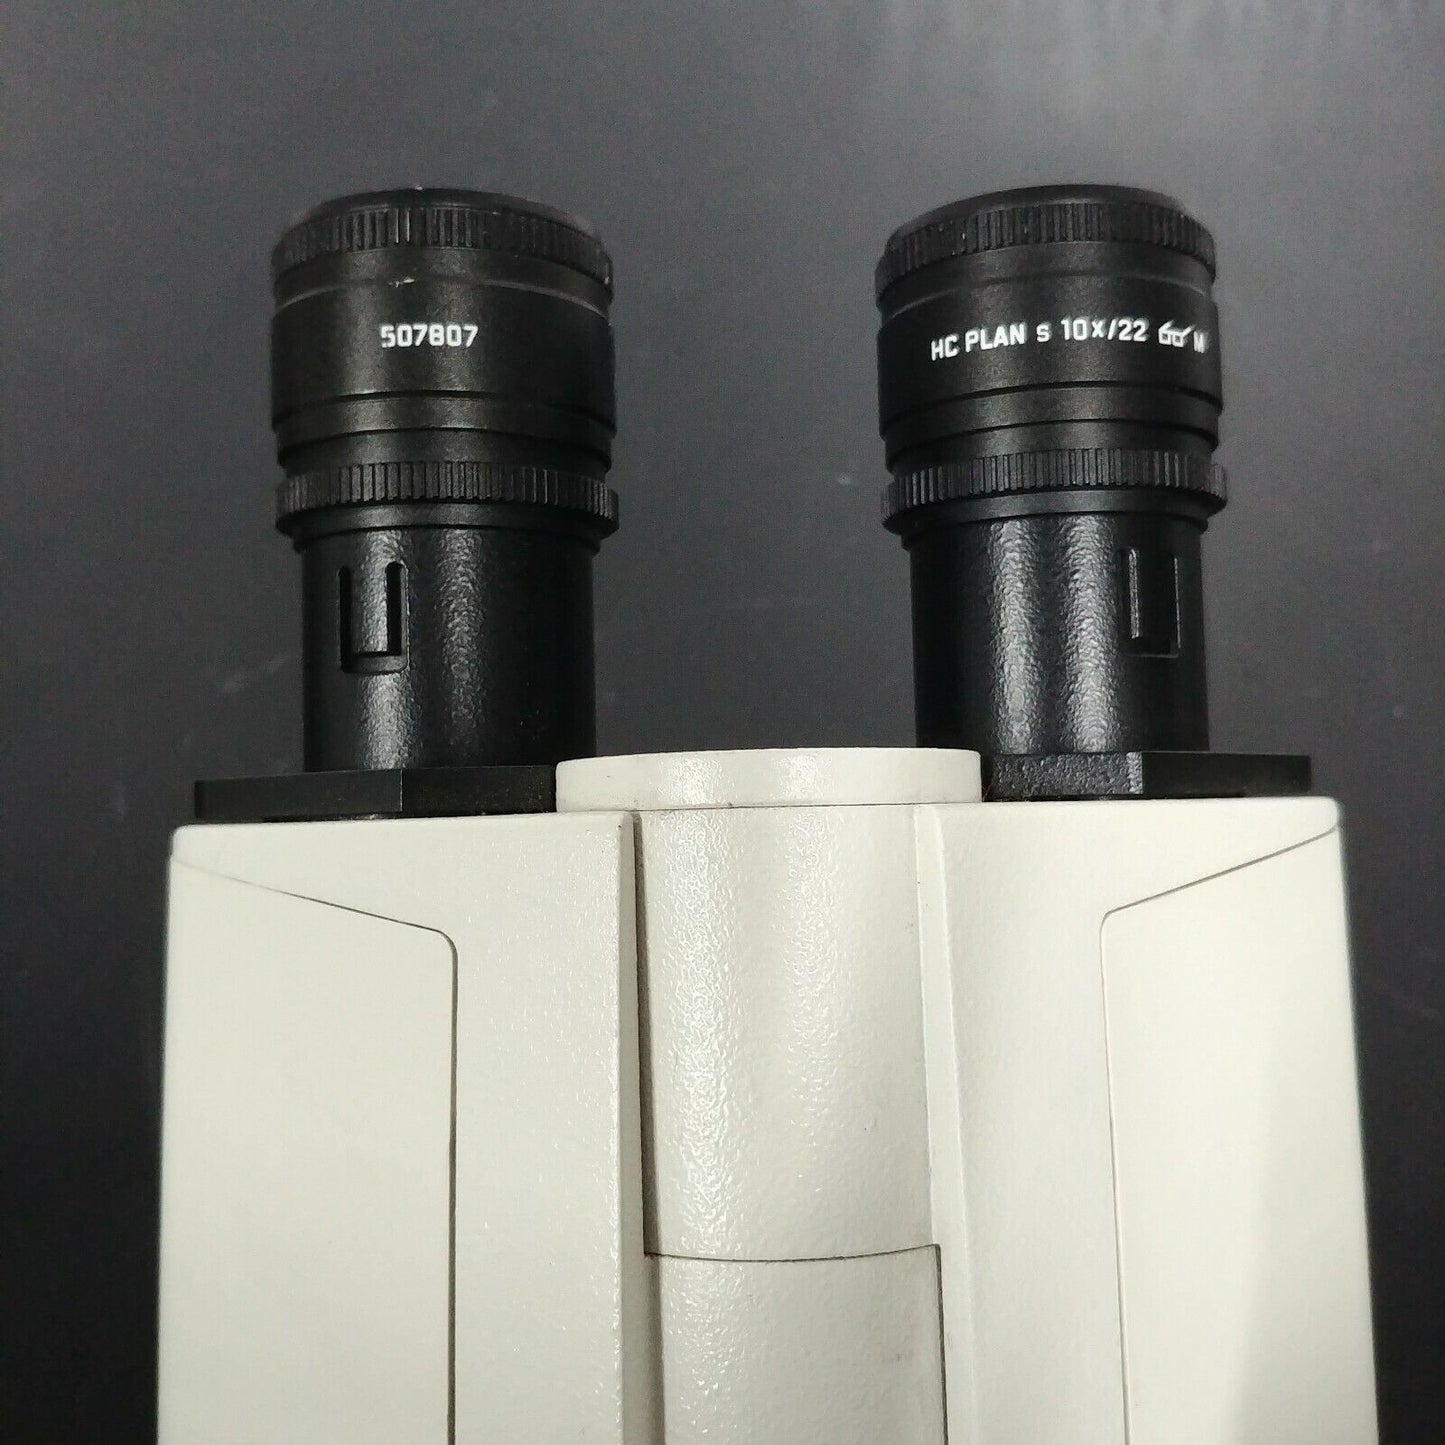 Leica Microscope FS4000 Forensic Comparison Bridge w/ Tilt Head & Eyepieces - microscopemarketplace